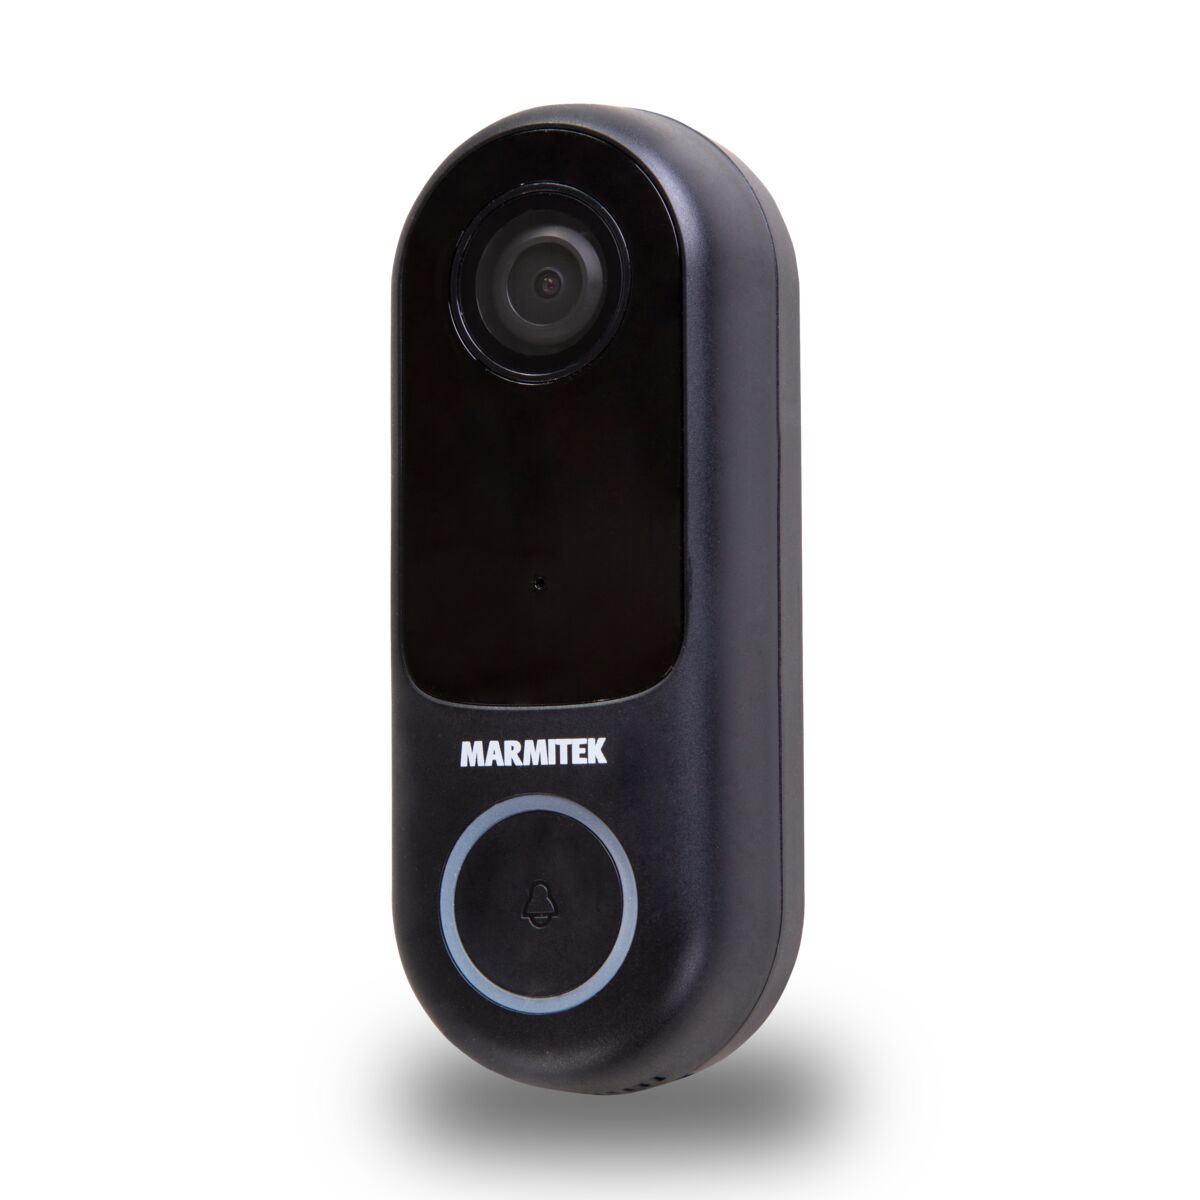 Buzz LO - Doorbell camera - Side View Image right angle | Marmitek